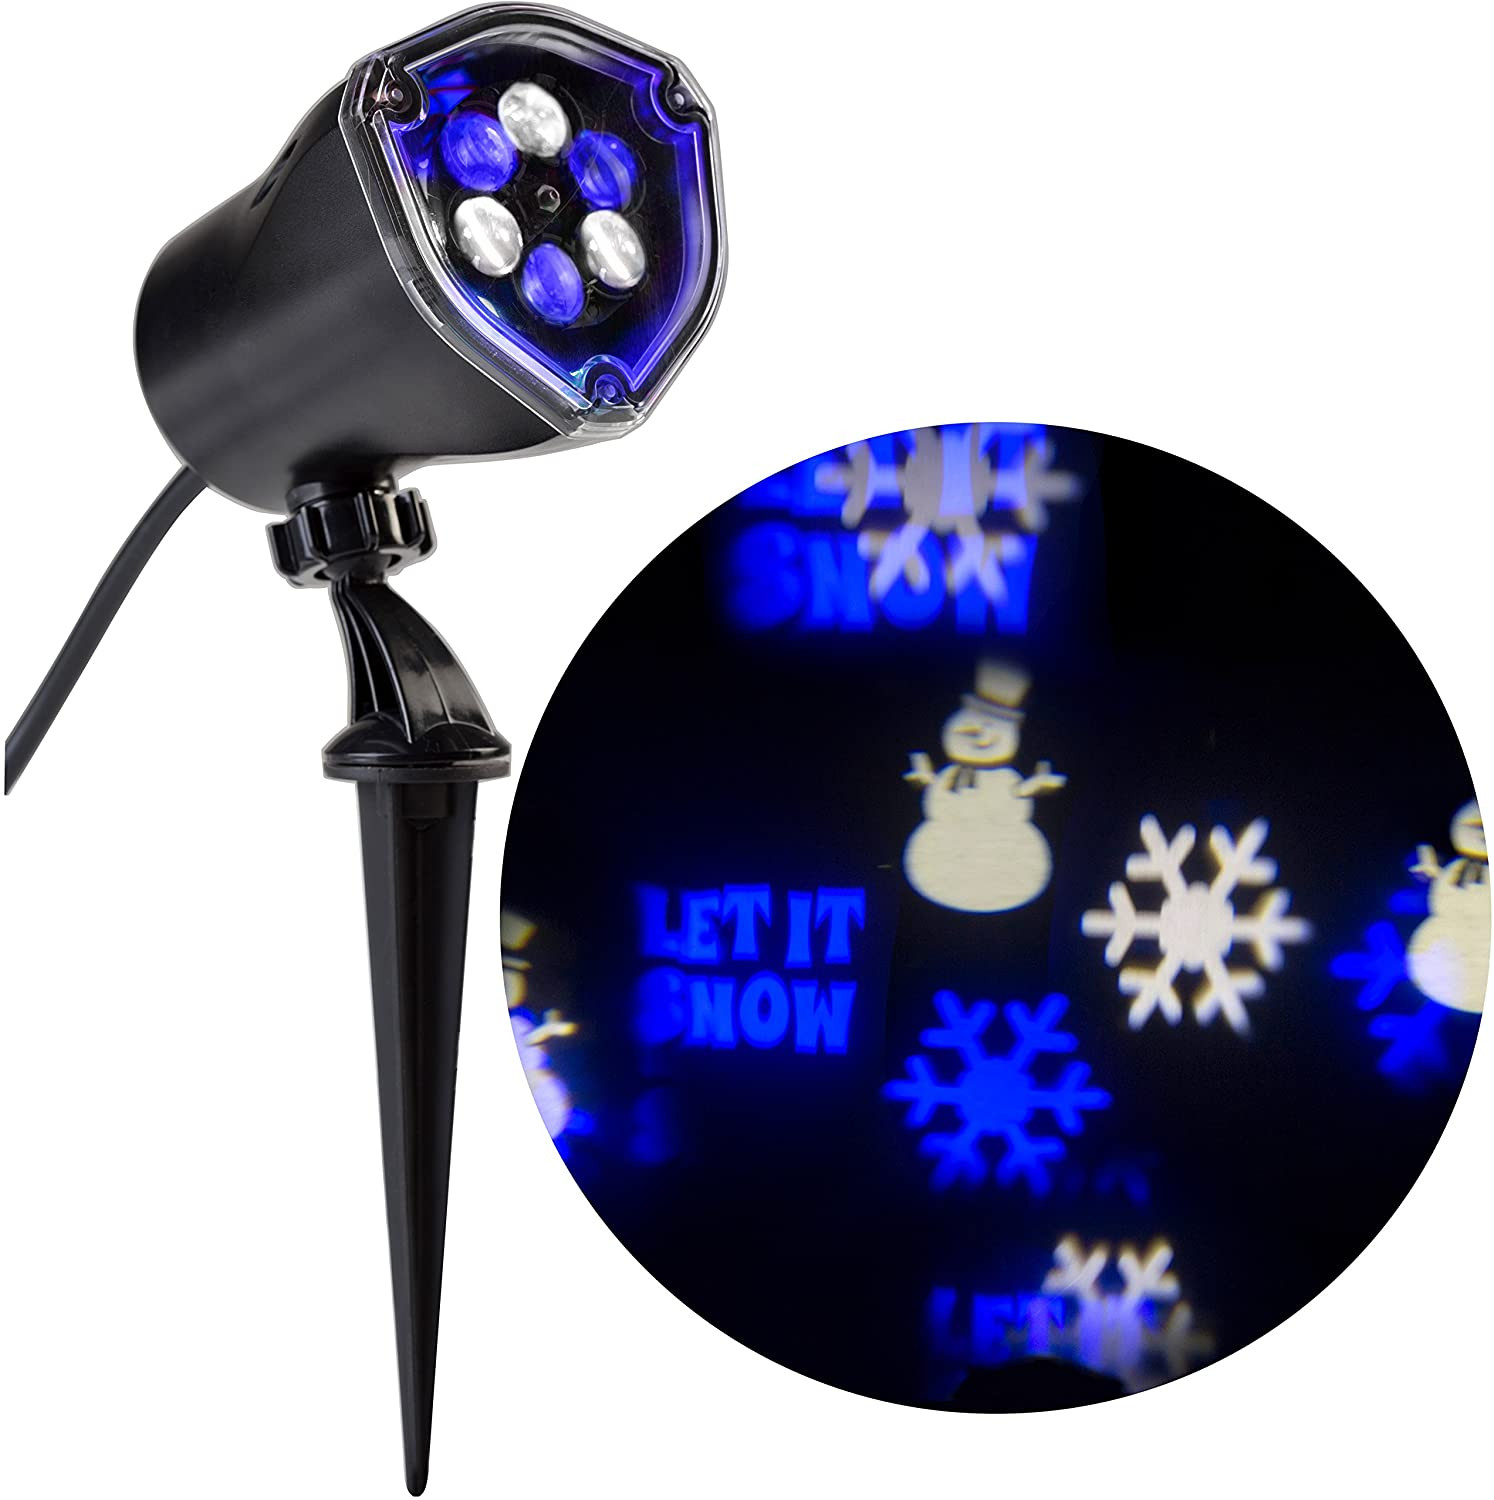 Lightshow Snowman "Let it Snow" Projection Swivel Spotlight